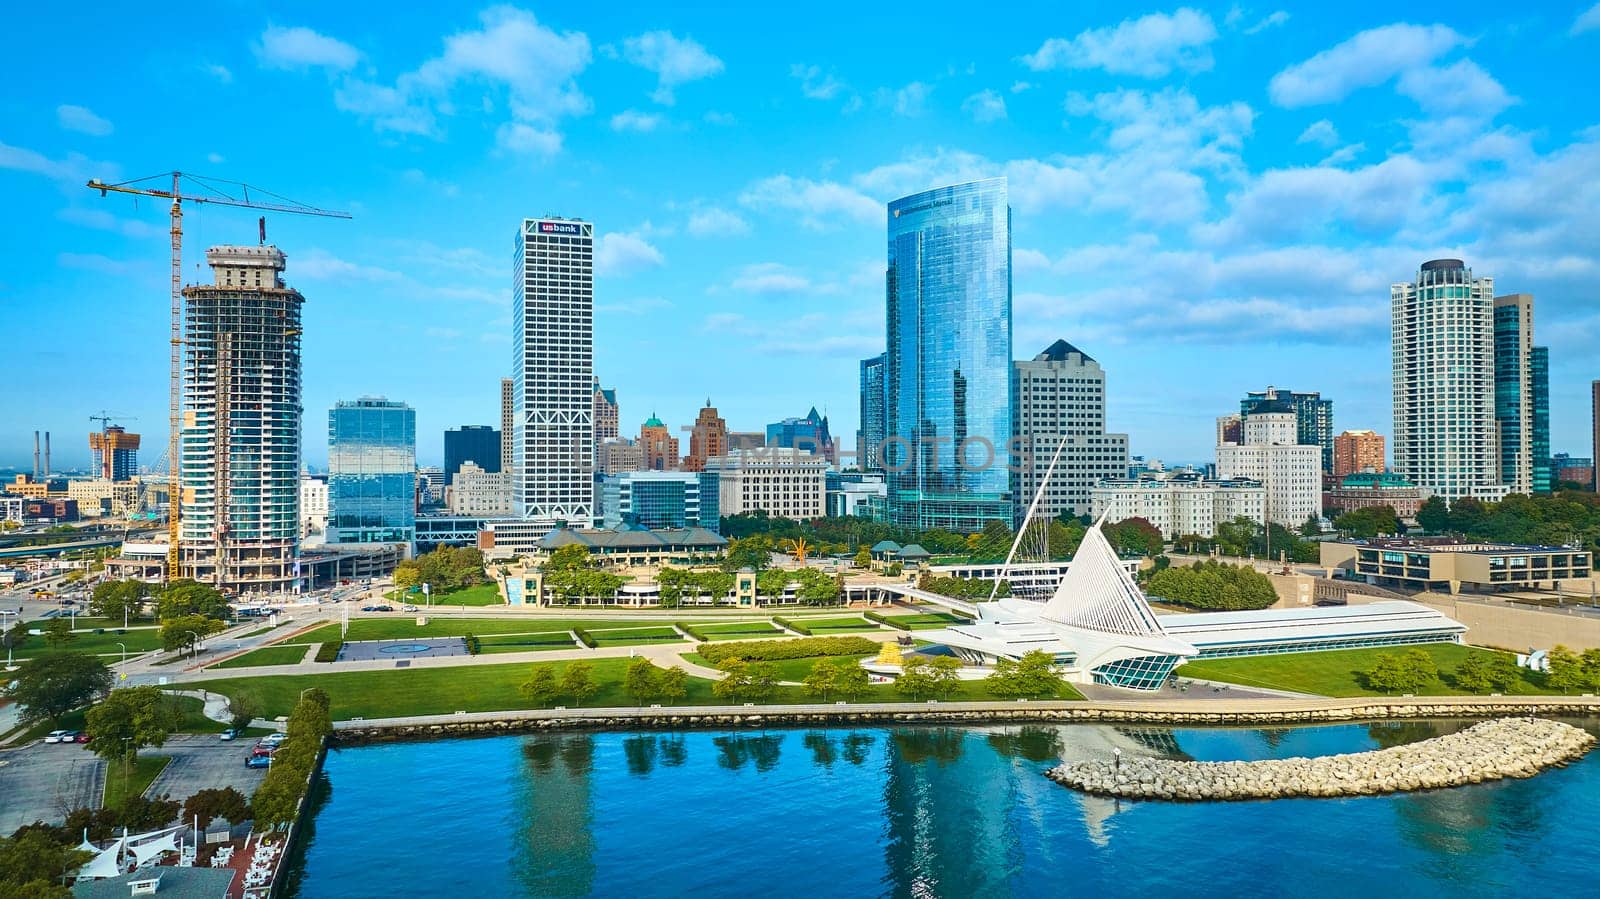 Aerial View of Milwaukee's Expansive Cityscape with Vibrant Lake Michigan Shoreline, Quadracci Pavilion Art Museum and New Skyscraper Construction, 2023